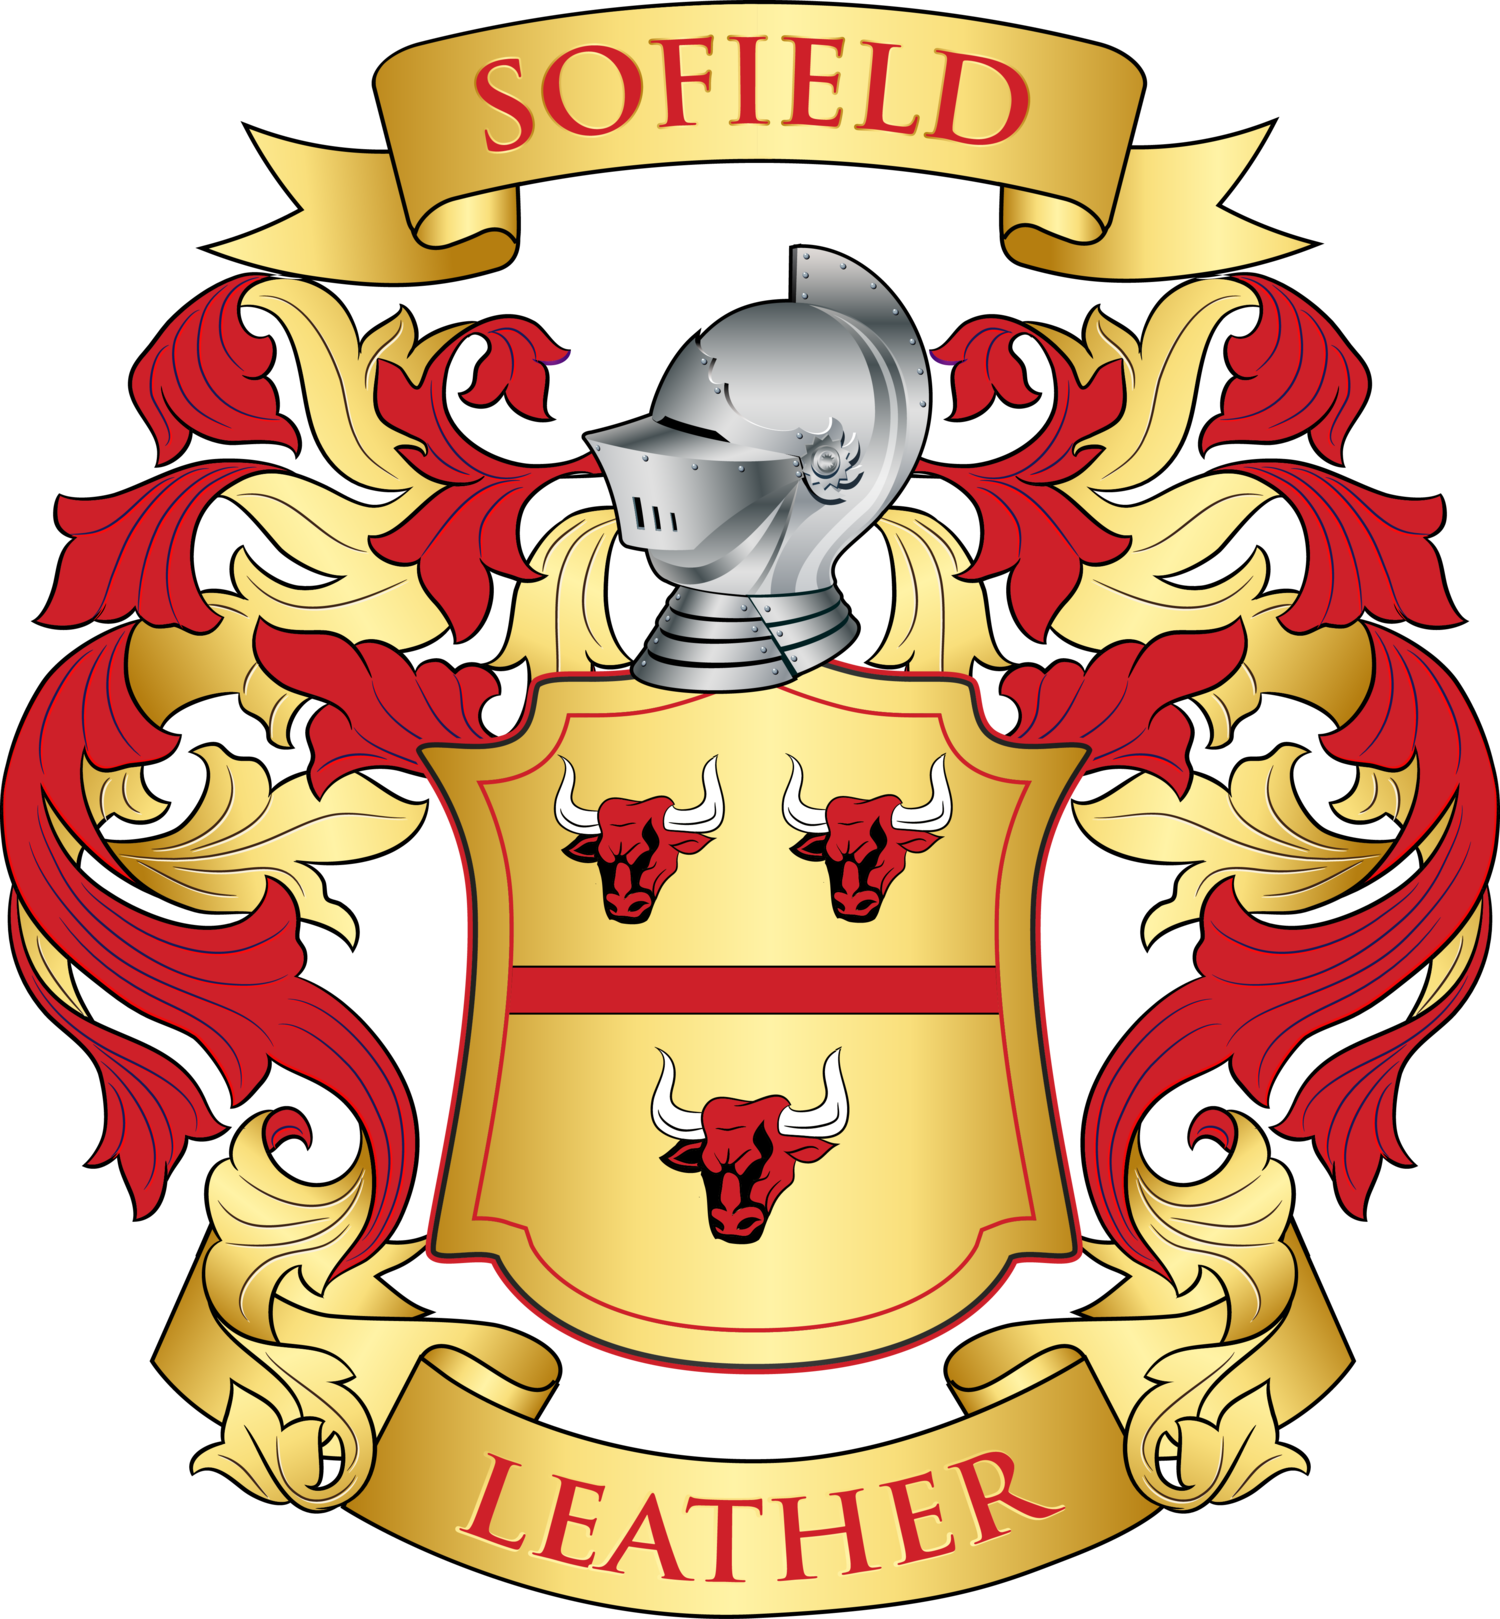 Sofield Leather